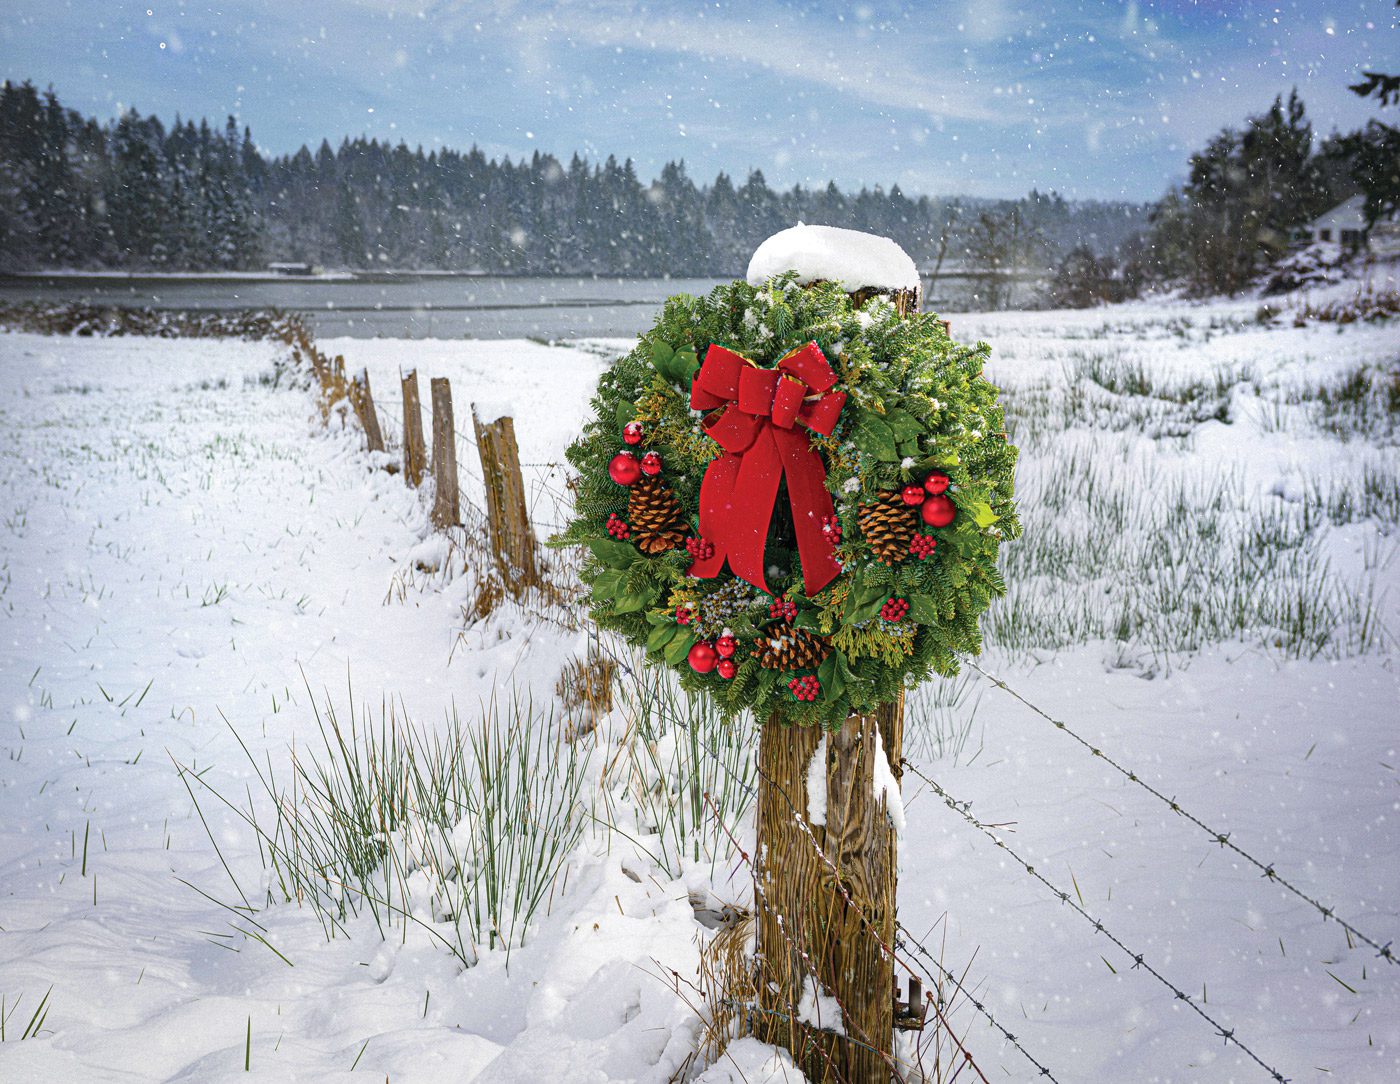 fresh Christmas wreath in snow